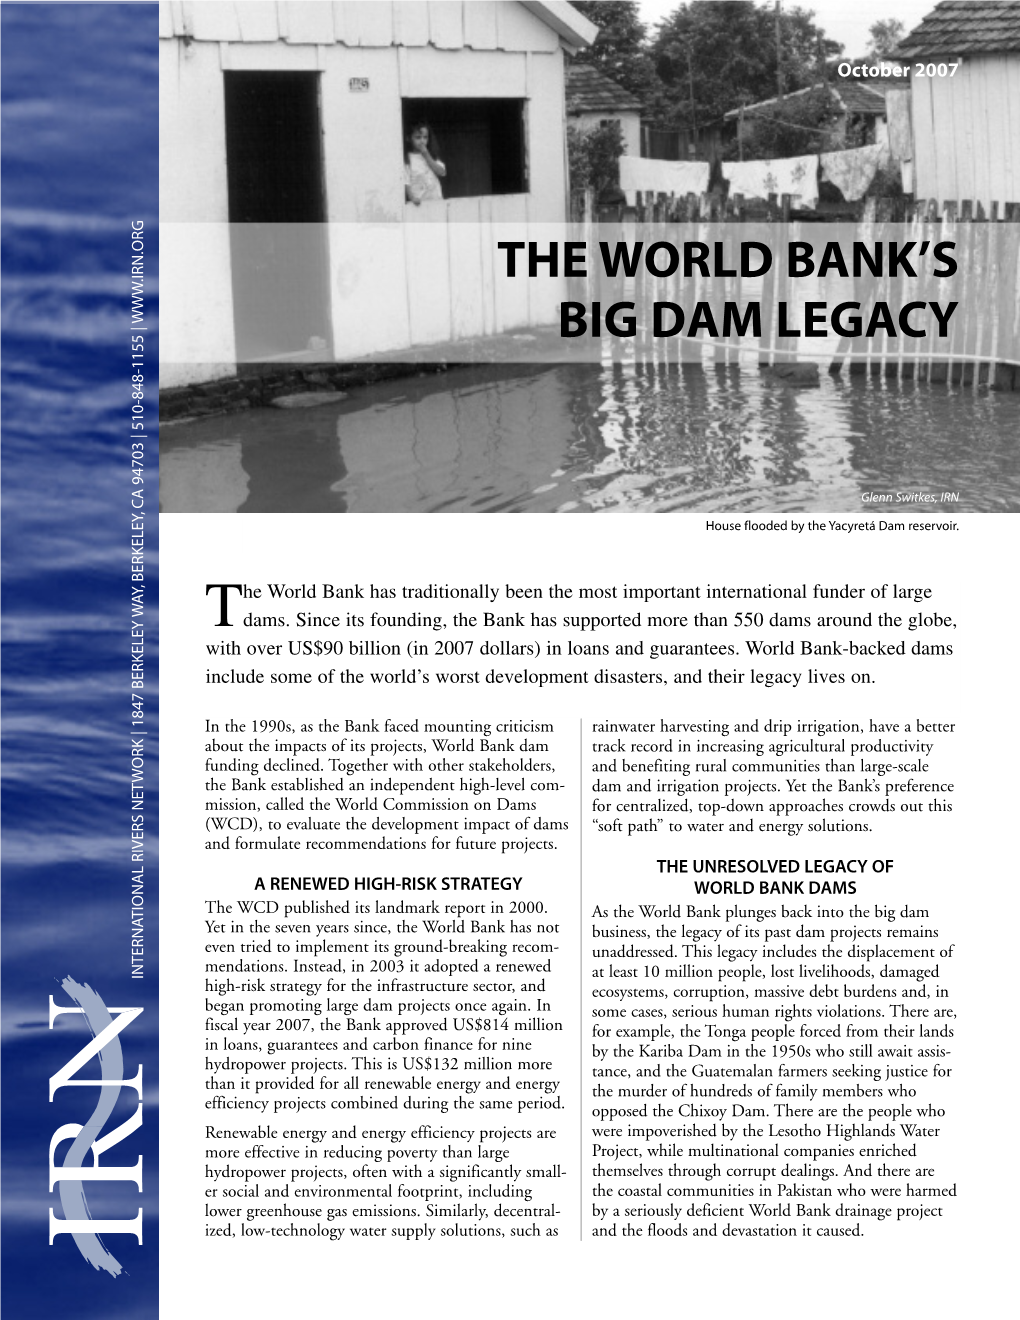 The World Bank's Big Dam Legacy